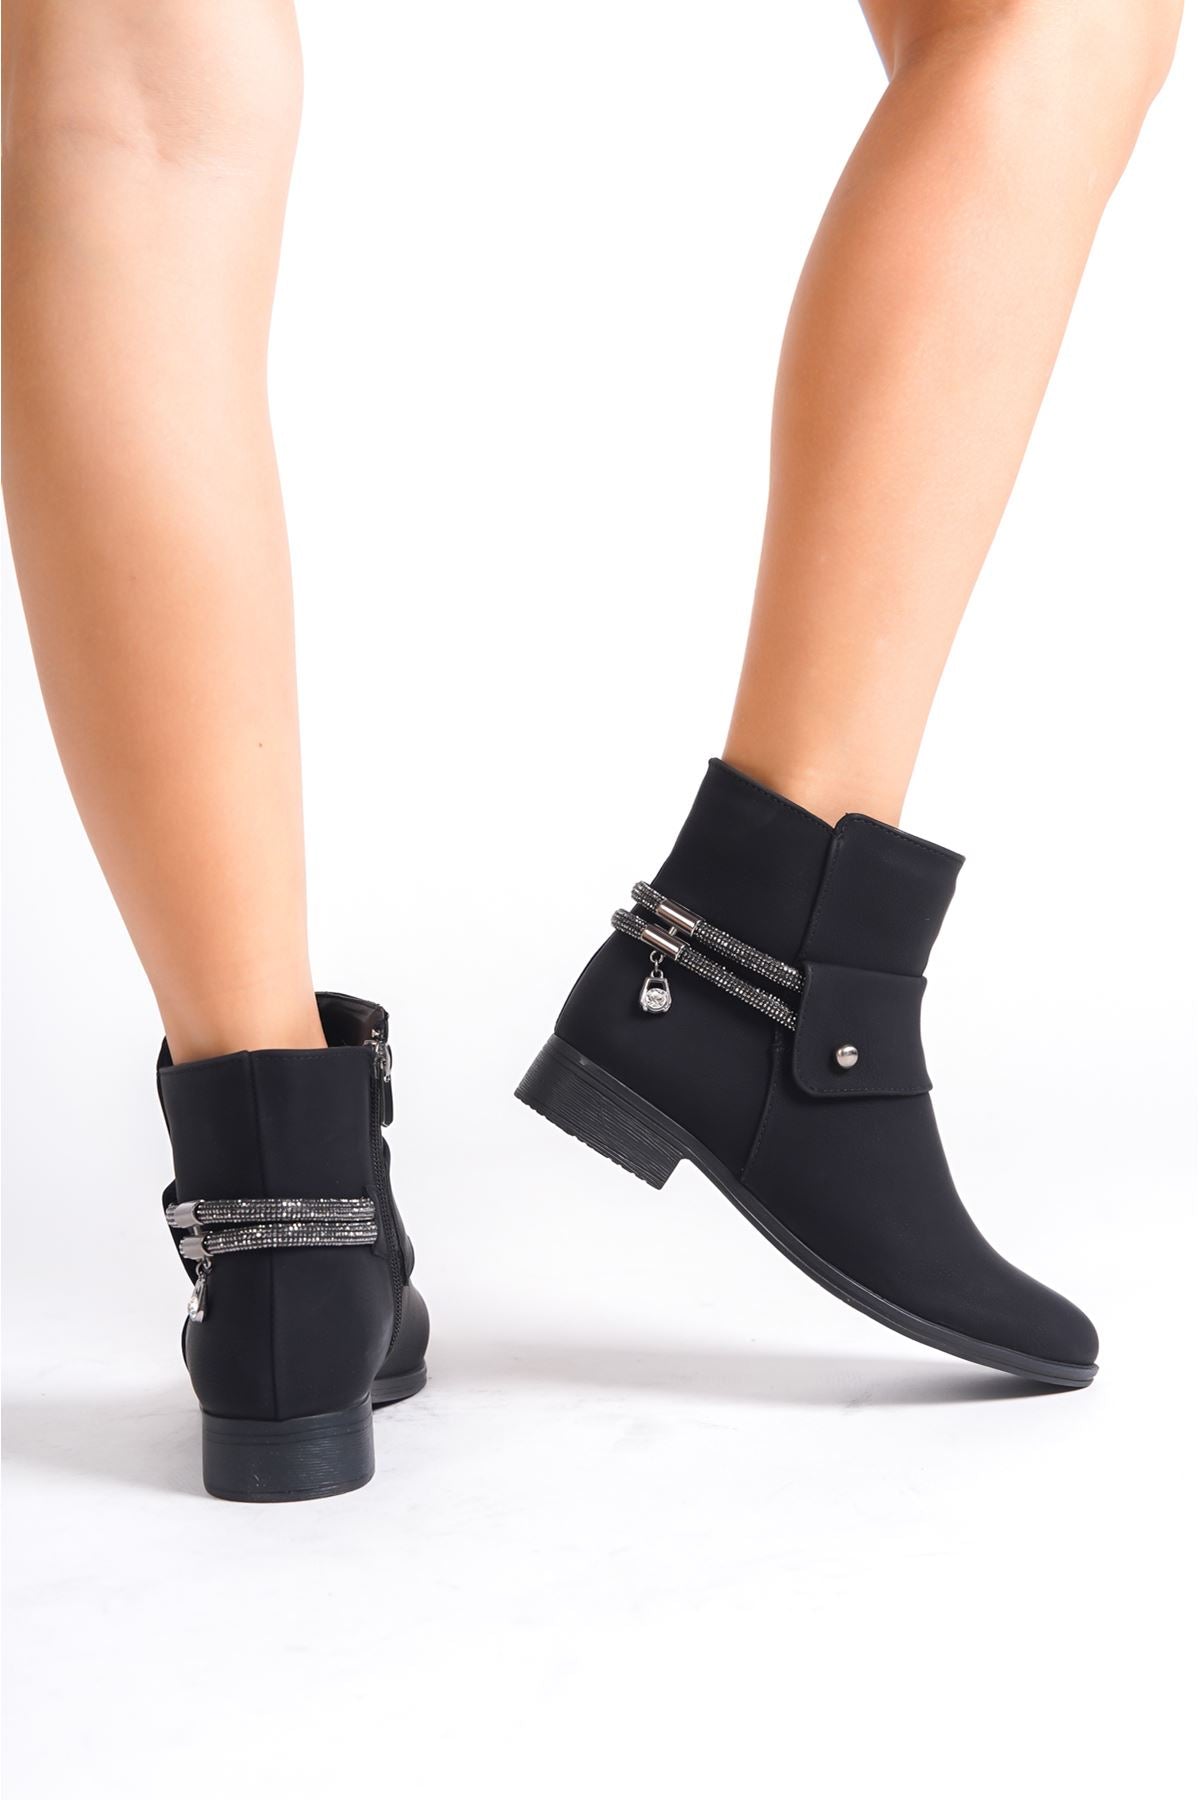 Melay Stone Zippered Women's Boots - STREETMODE ™